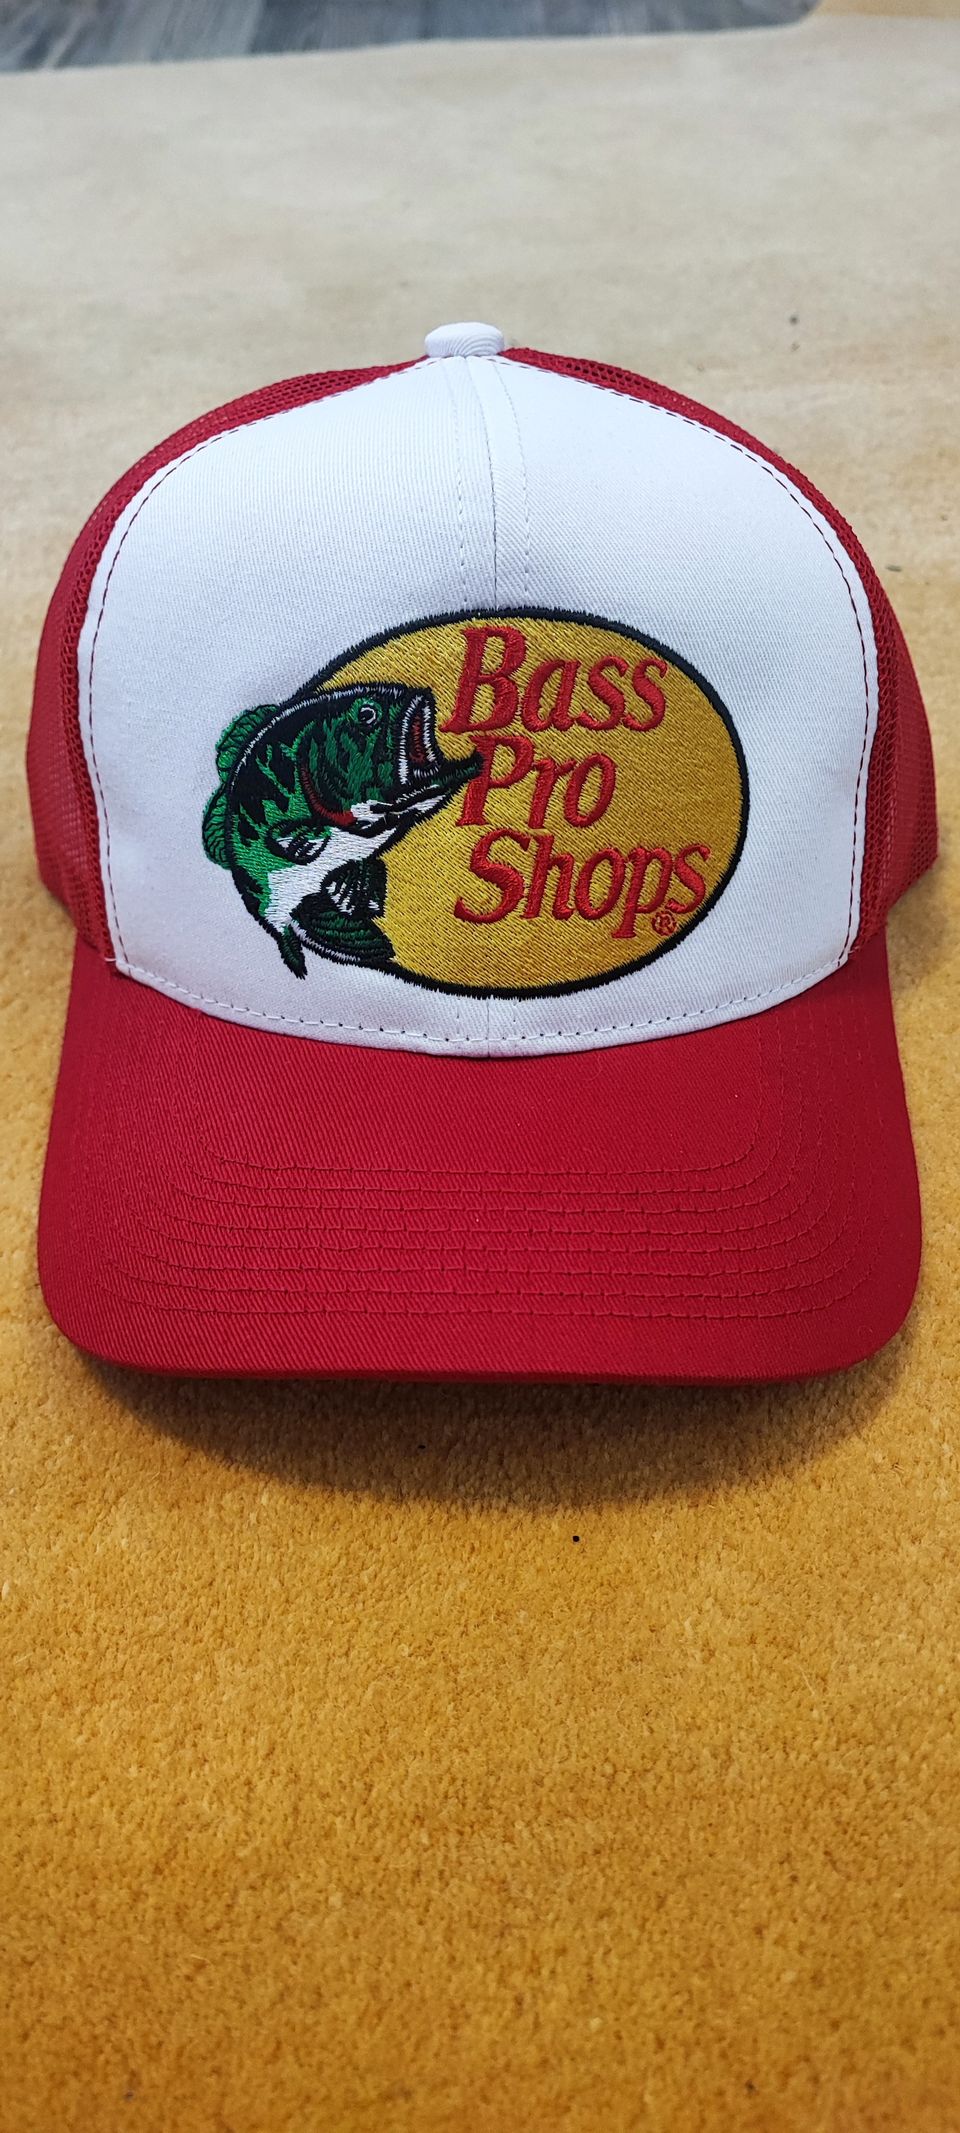 Kanada Bass Pro Shops, brodeerattu Snapback lippis. Kanada.